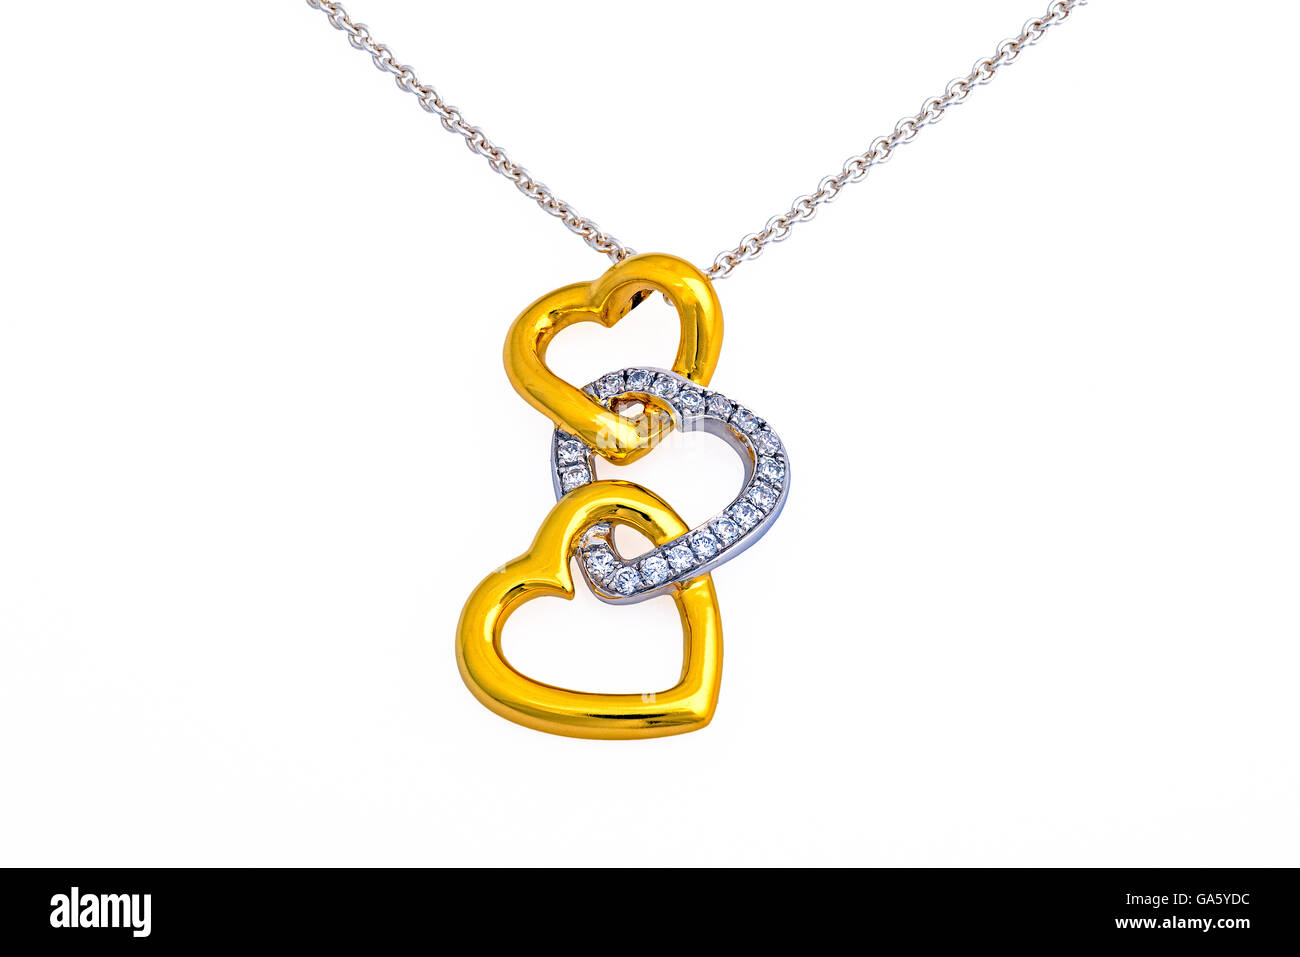 Gold pendant, necklace, 3 hearts on white background Stock Photo